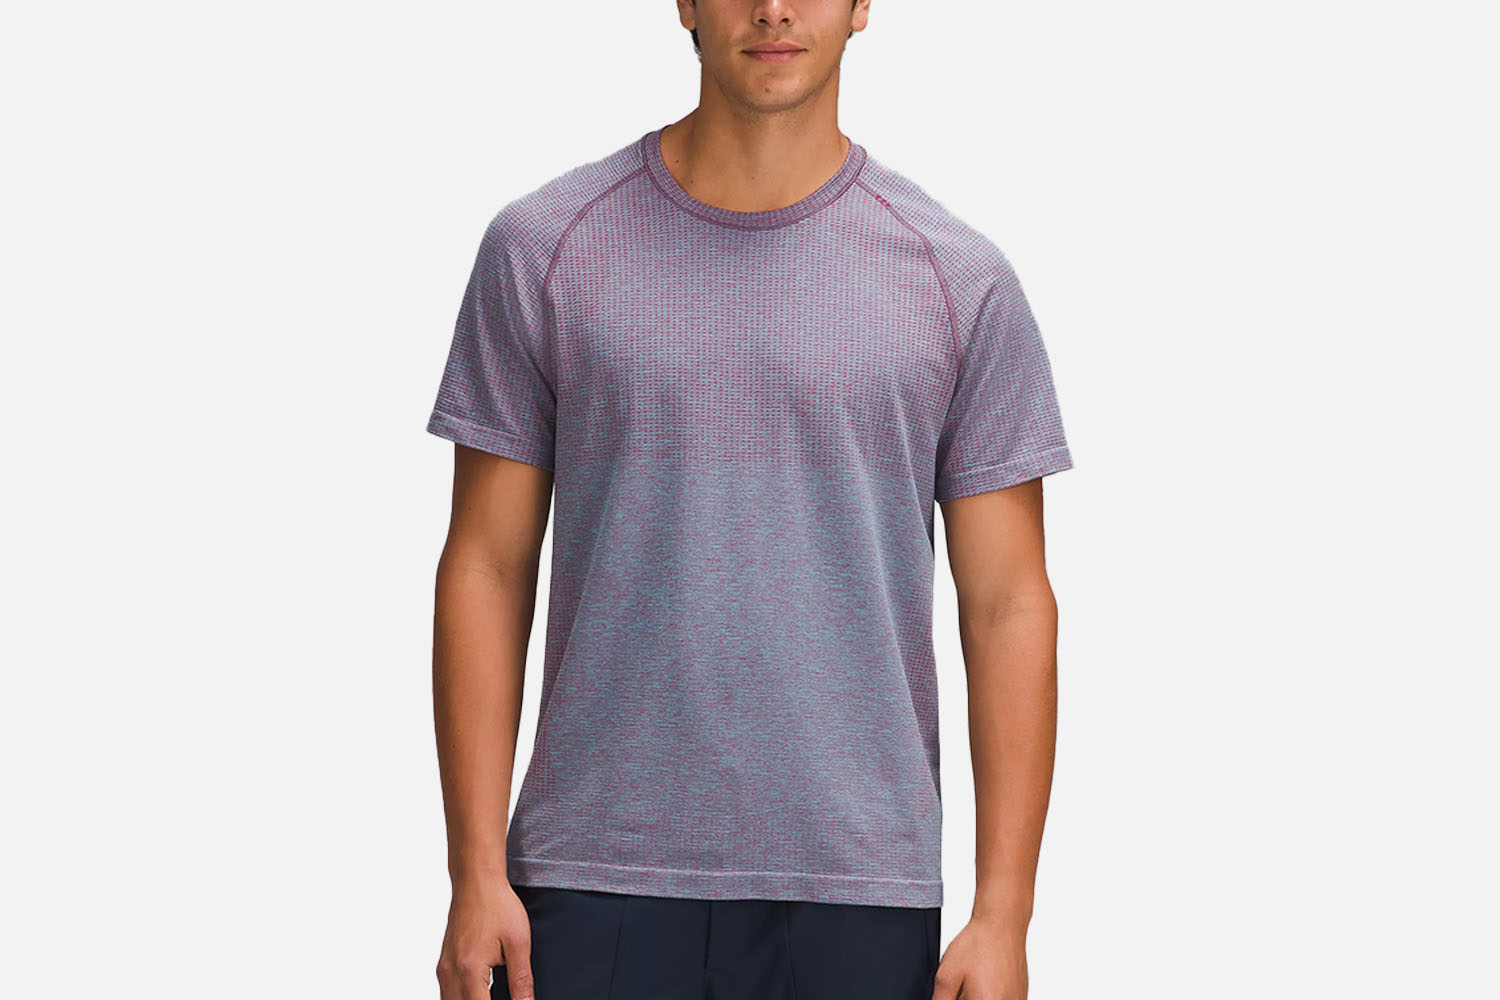 The Begrudgingly Excellent Workout Tee: lululemon Metal Vent Tech Short-Sleeve Shirt